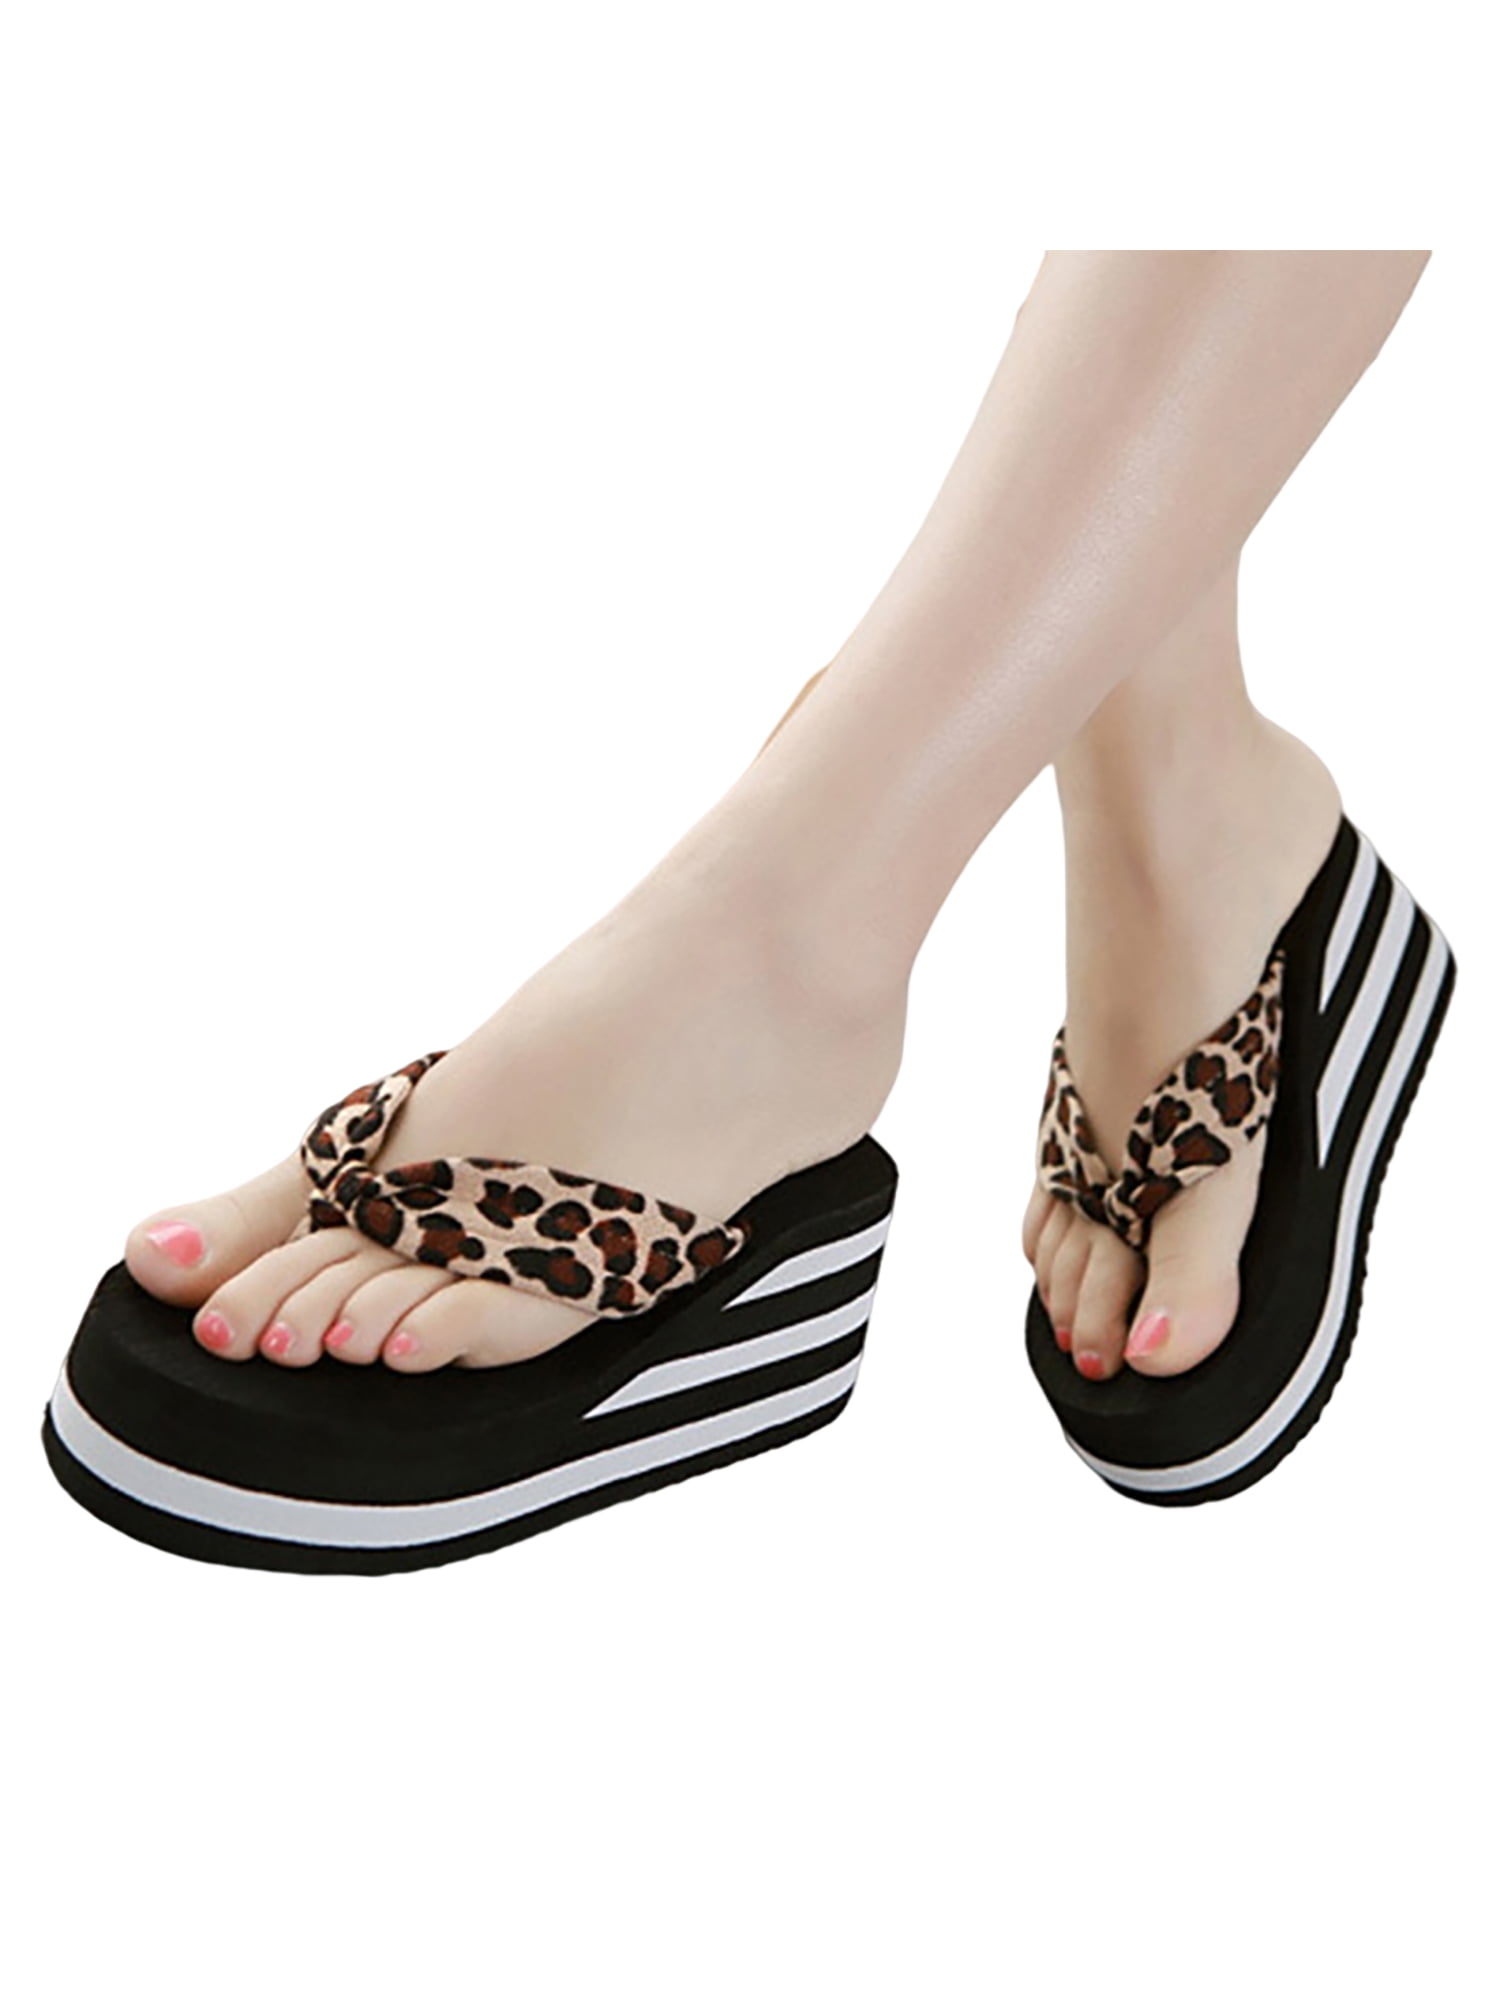 Buy Lacyhop Women Casual Wedge Sandals Comfort Leopard Flip-flops Summer  Beach Slippper SIZE  Online at Lowest Price in Ubuy Nepal. 175288822